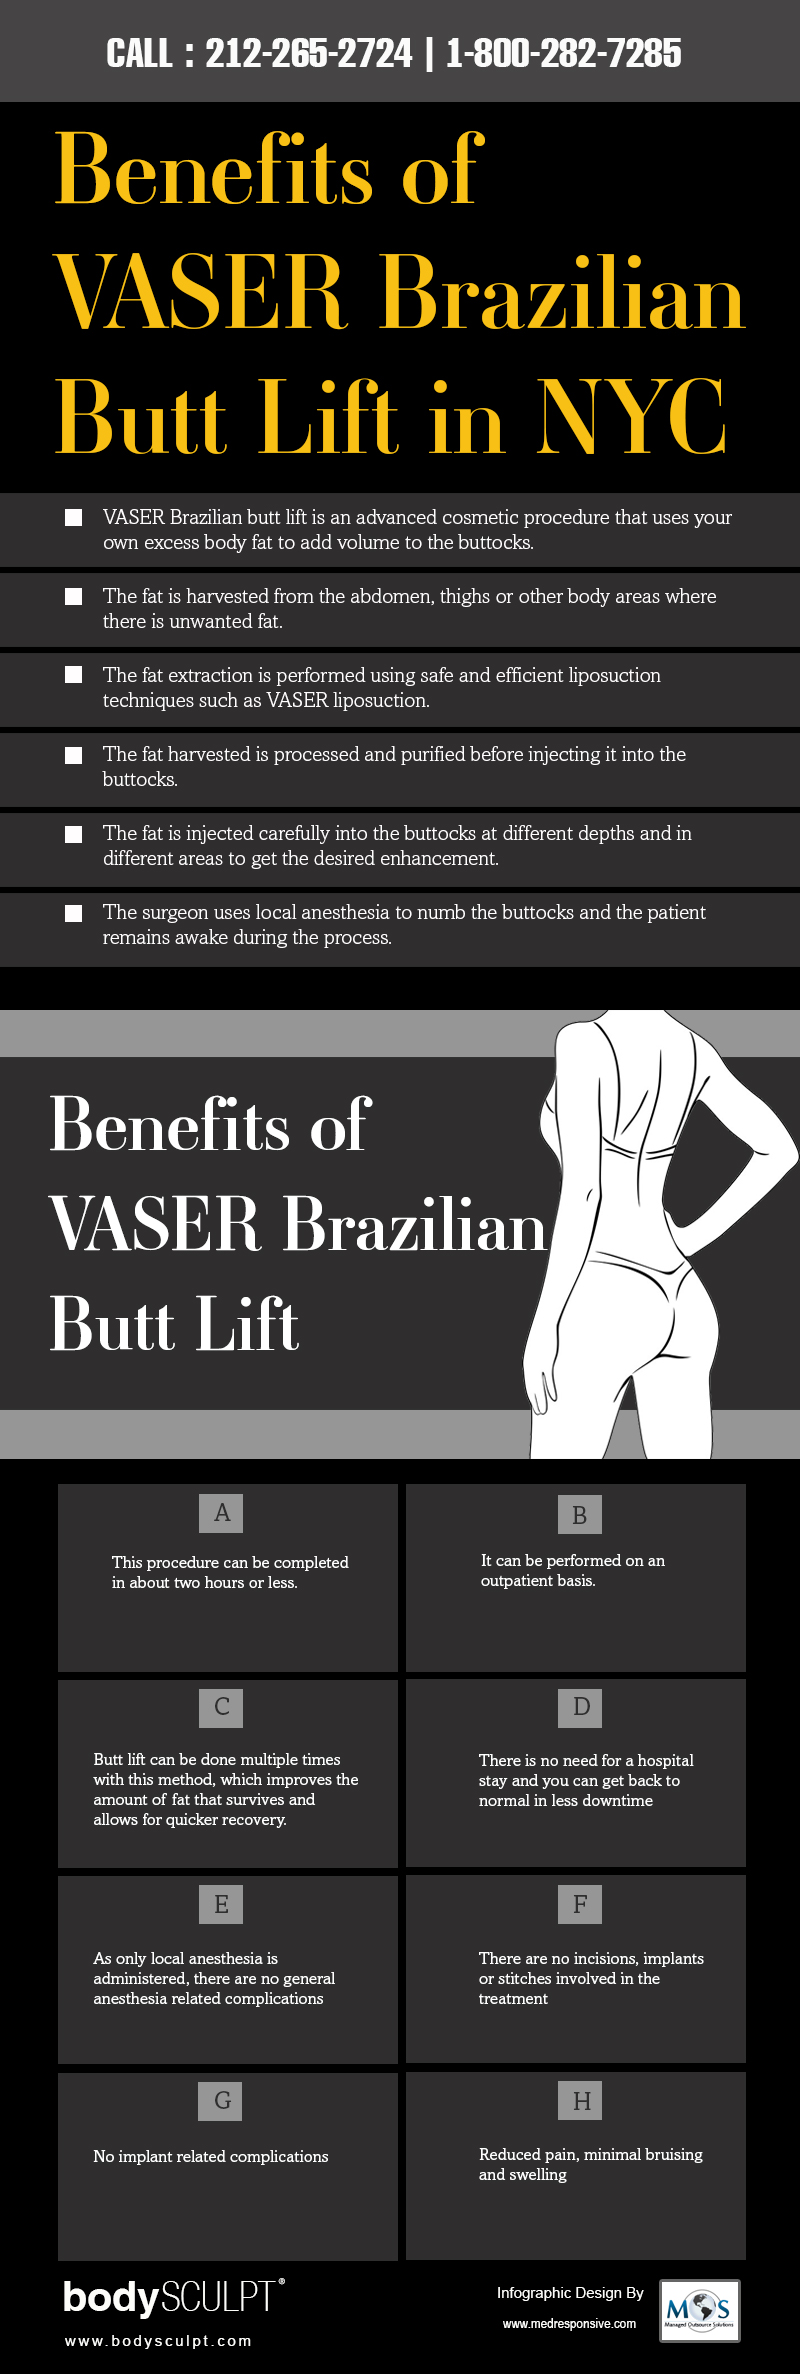 Benefits of VASER Brazilian Butt Lift in NYC